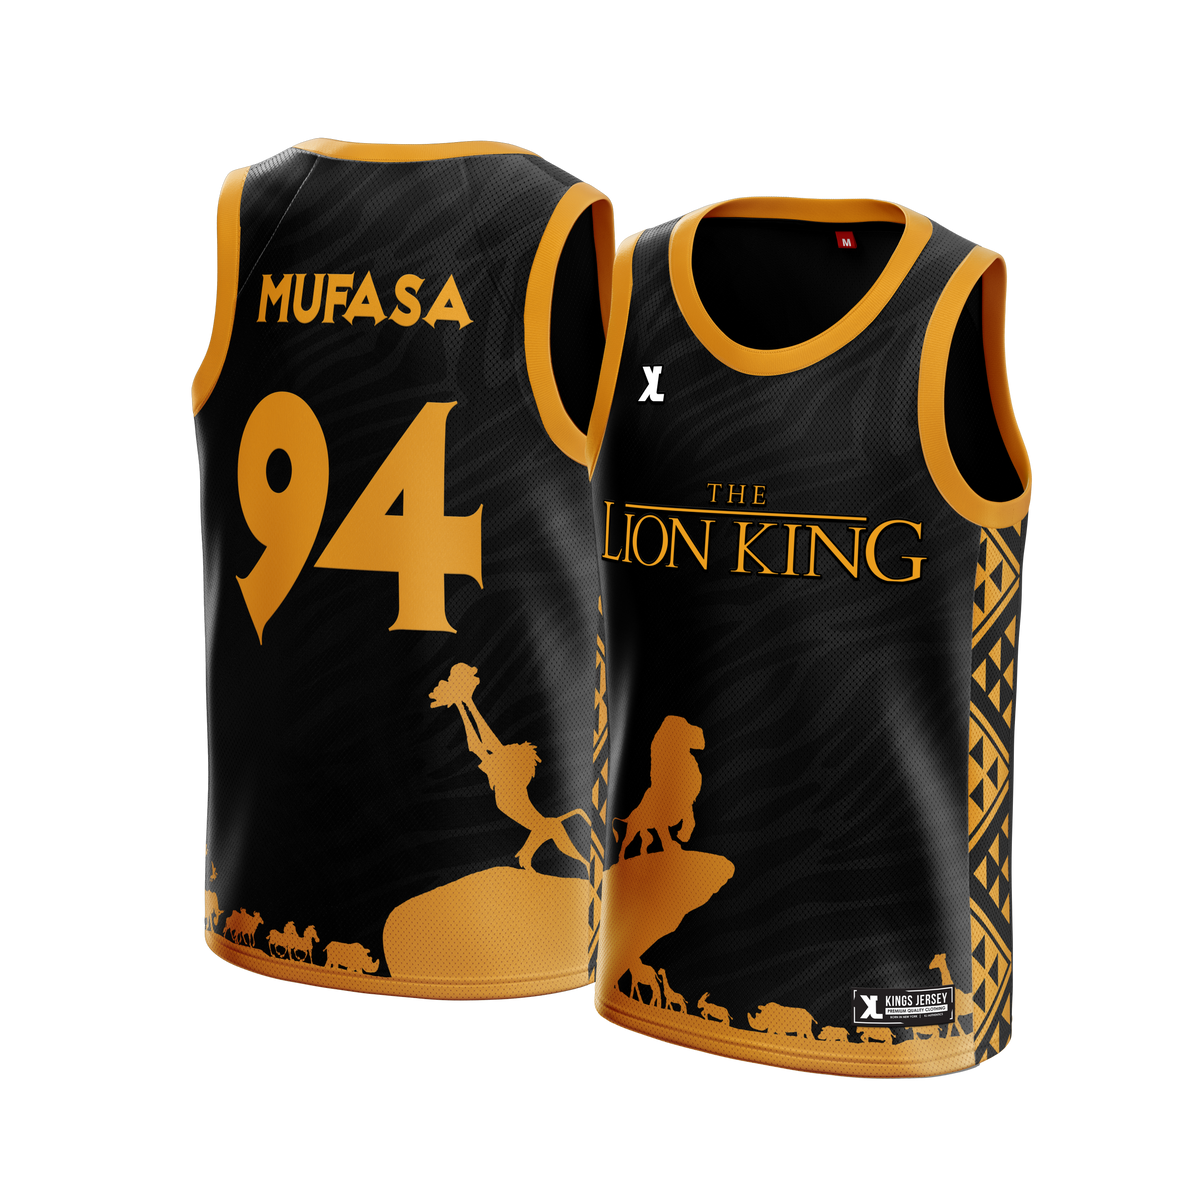 kings basketball jersey design